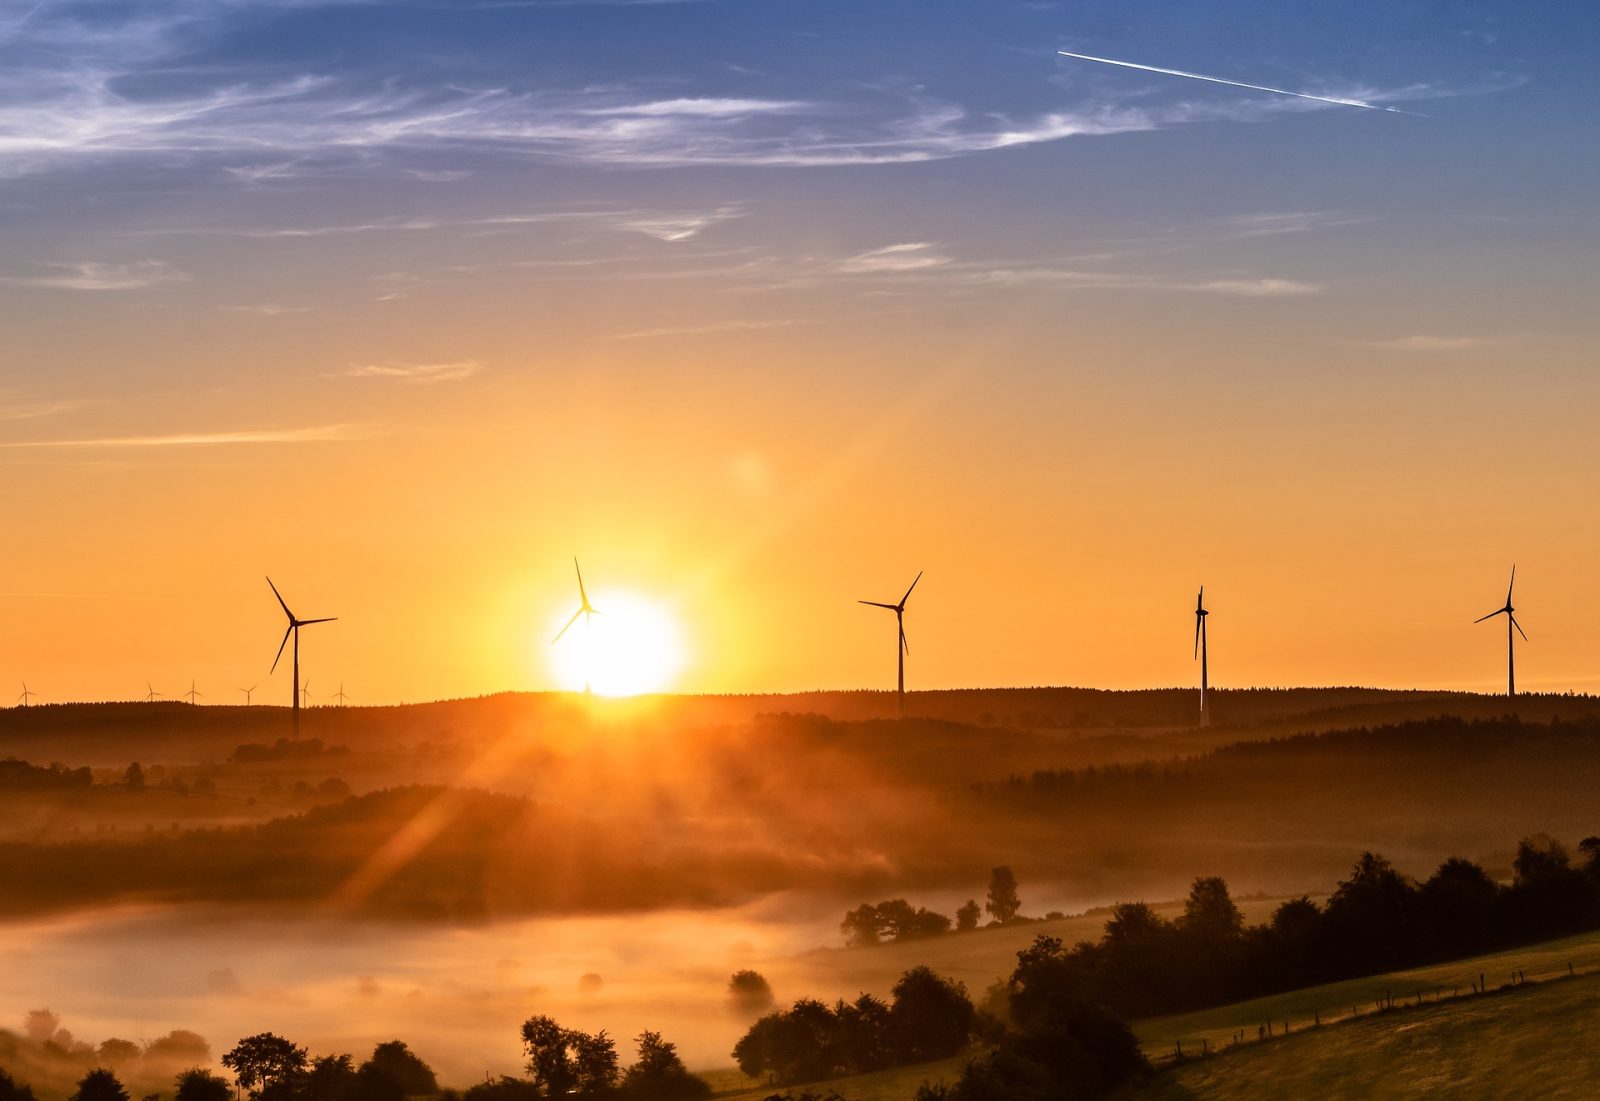 vindkraftverk varmt väder ger billig el